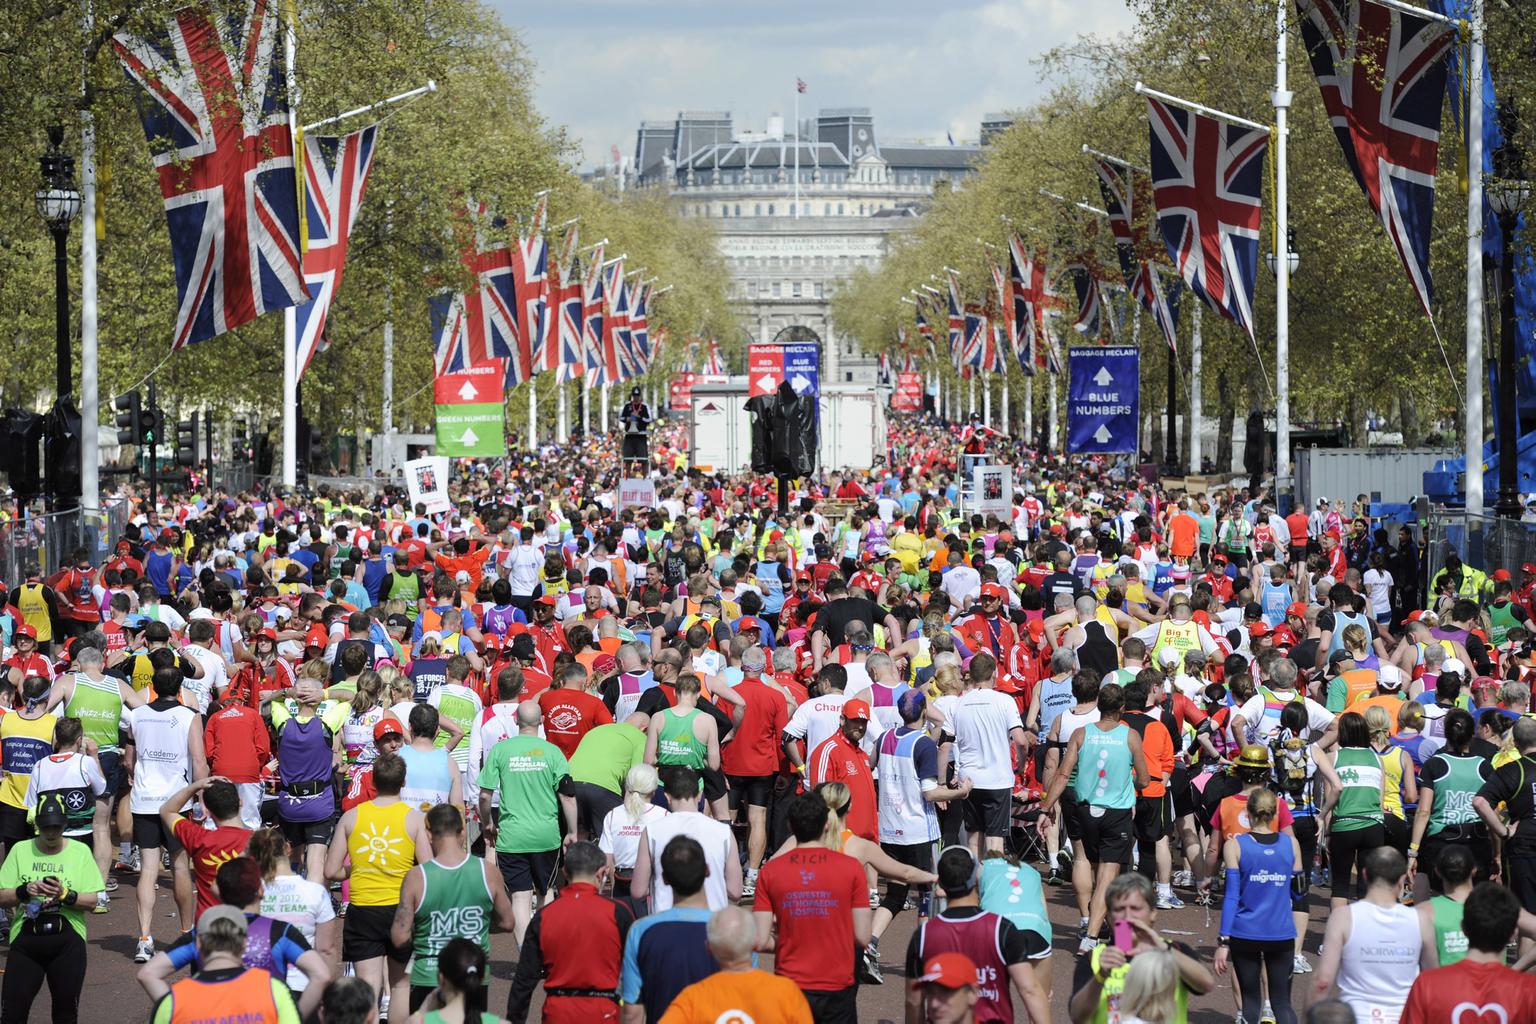 Inspired by Paigaam, Dewsbury man prepares to run the London Marathon